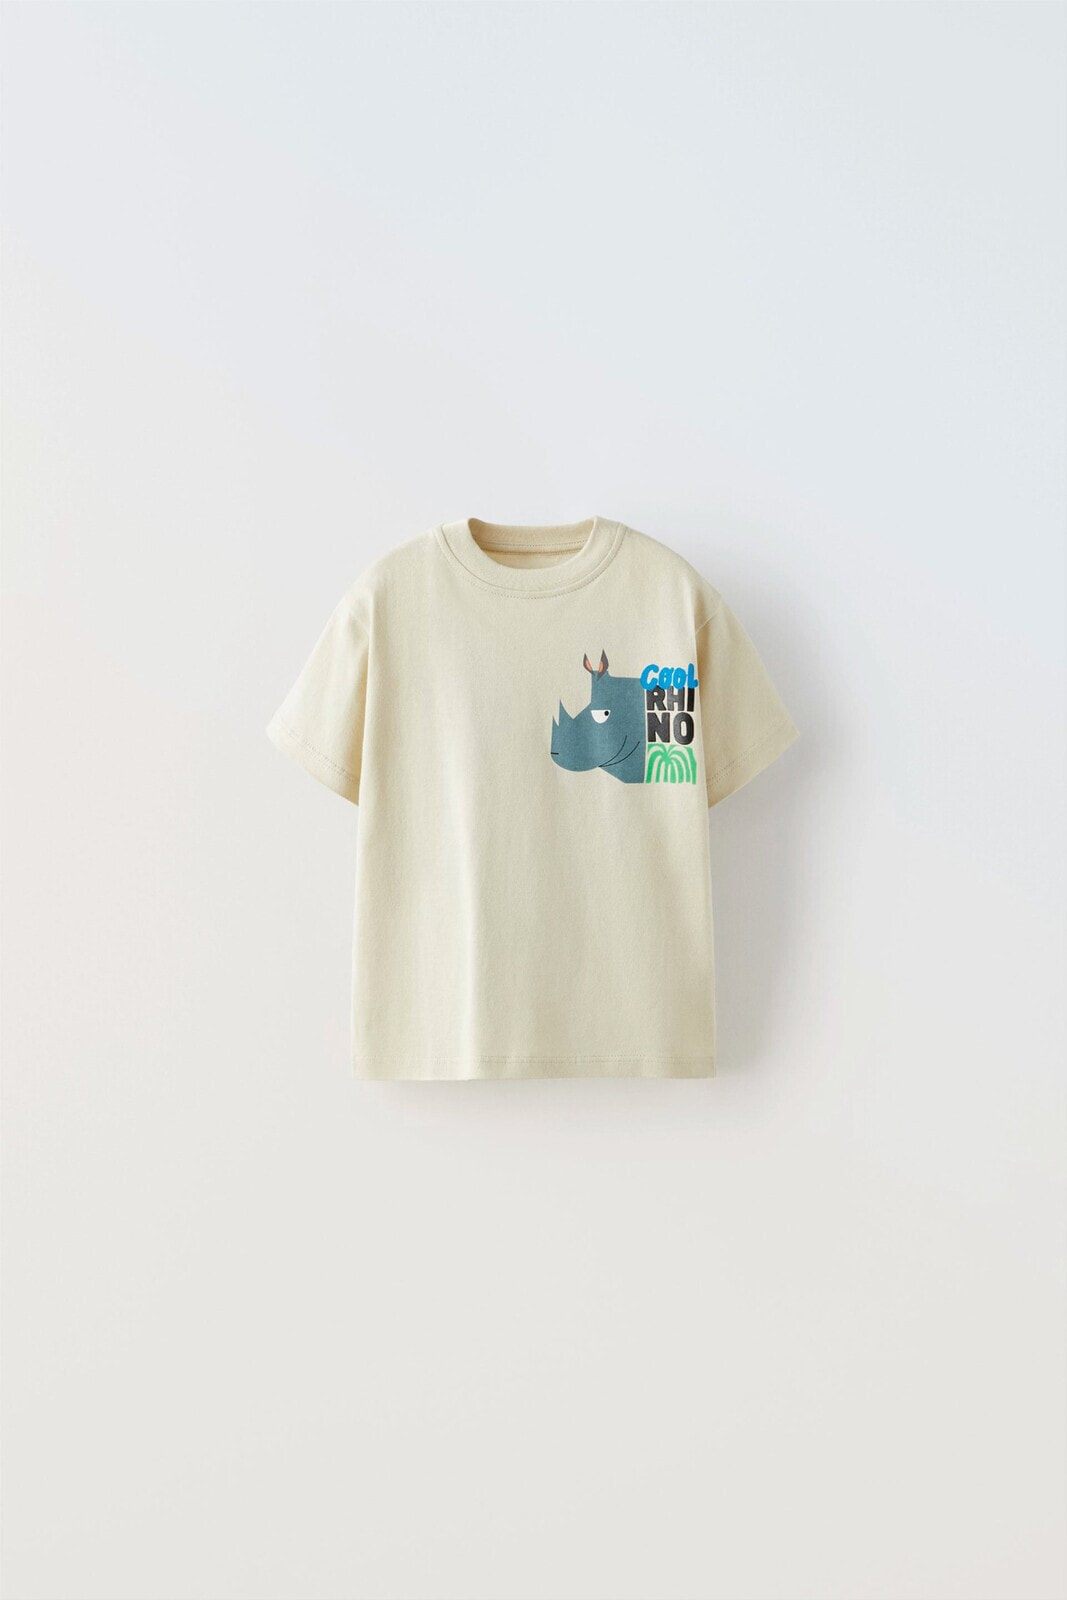 Rhino t-shirt